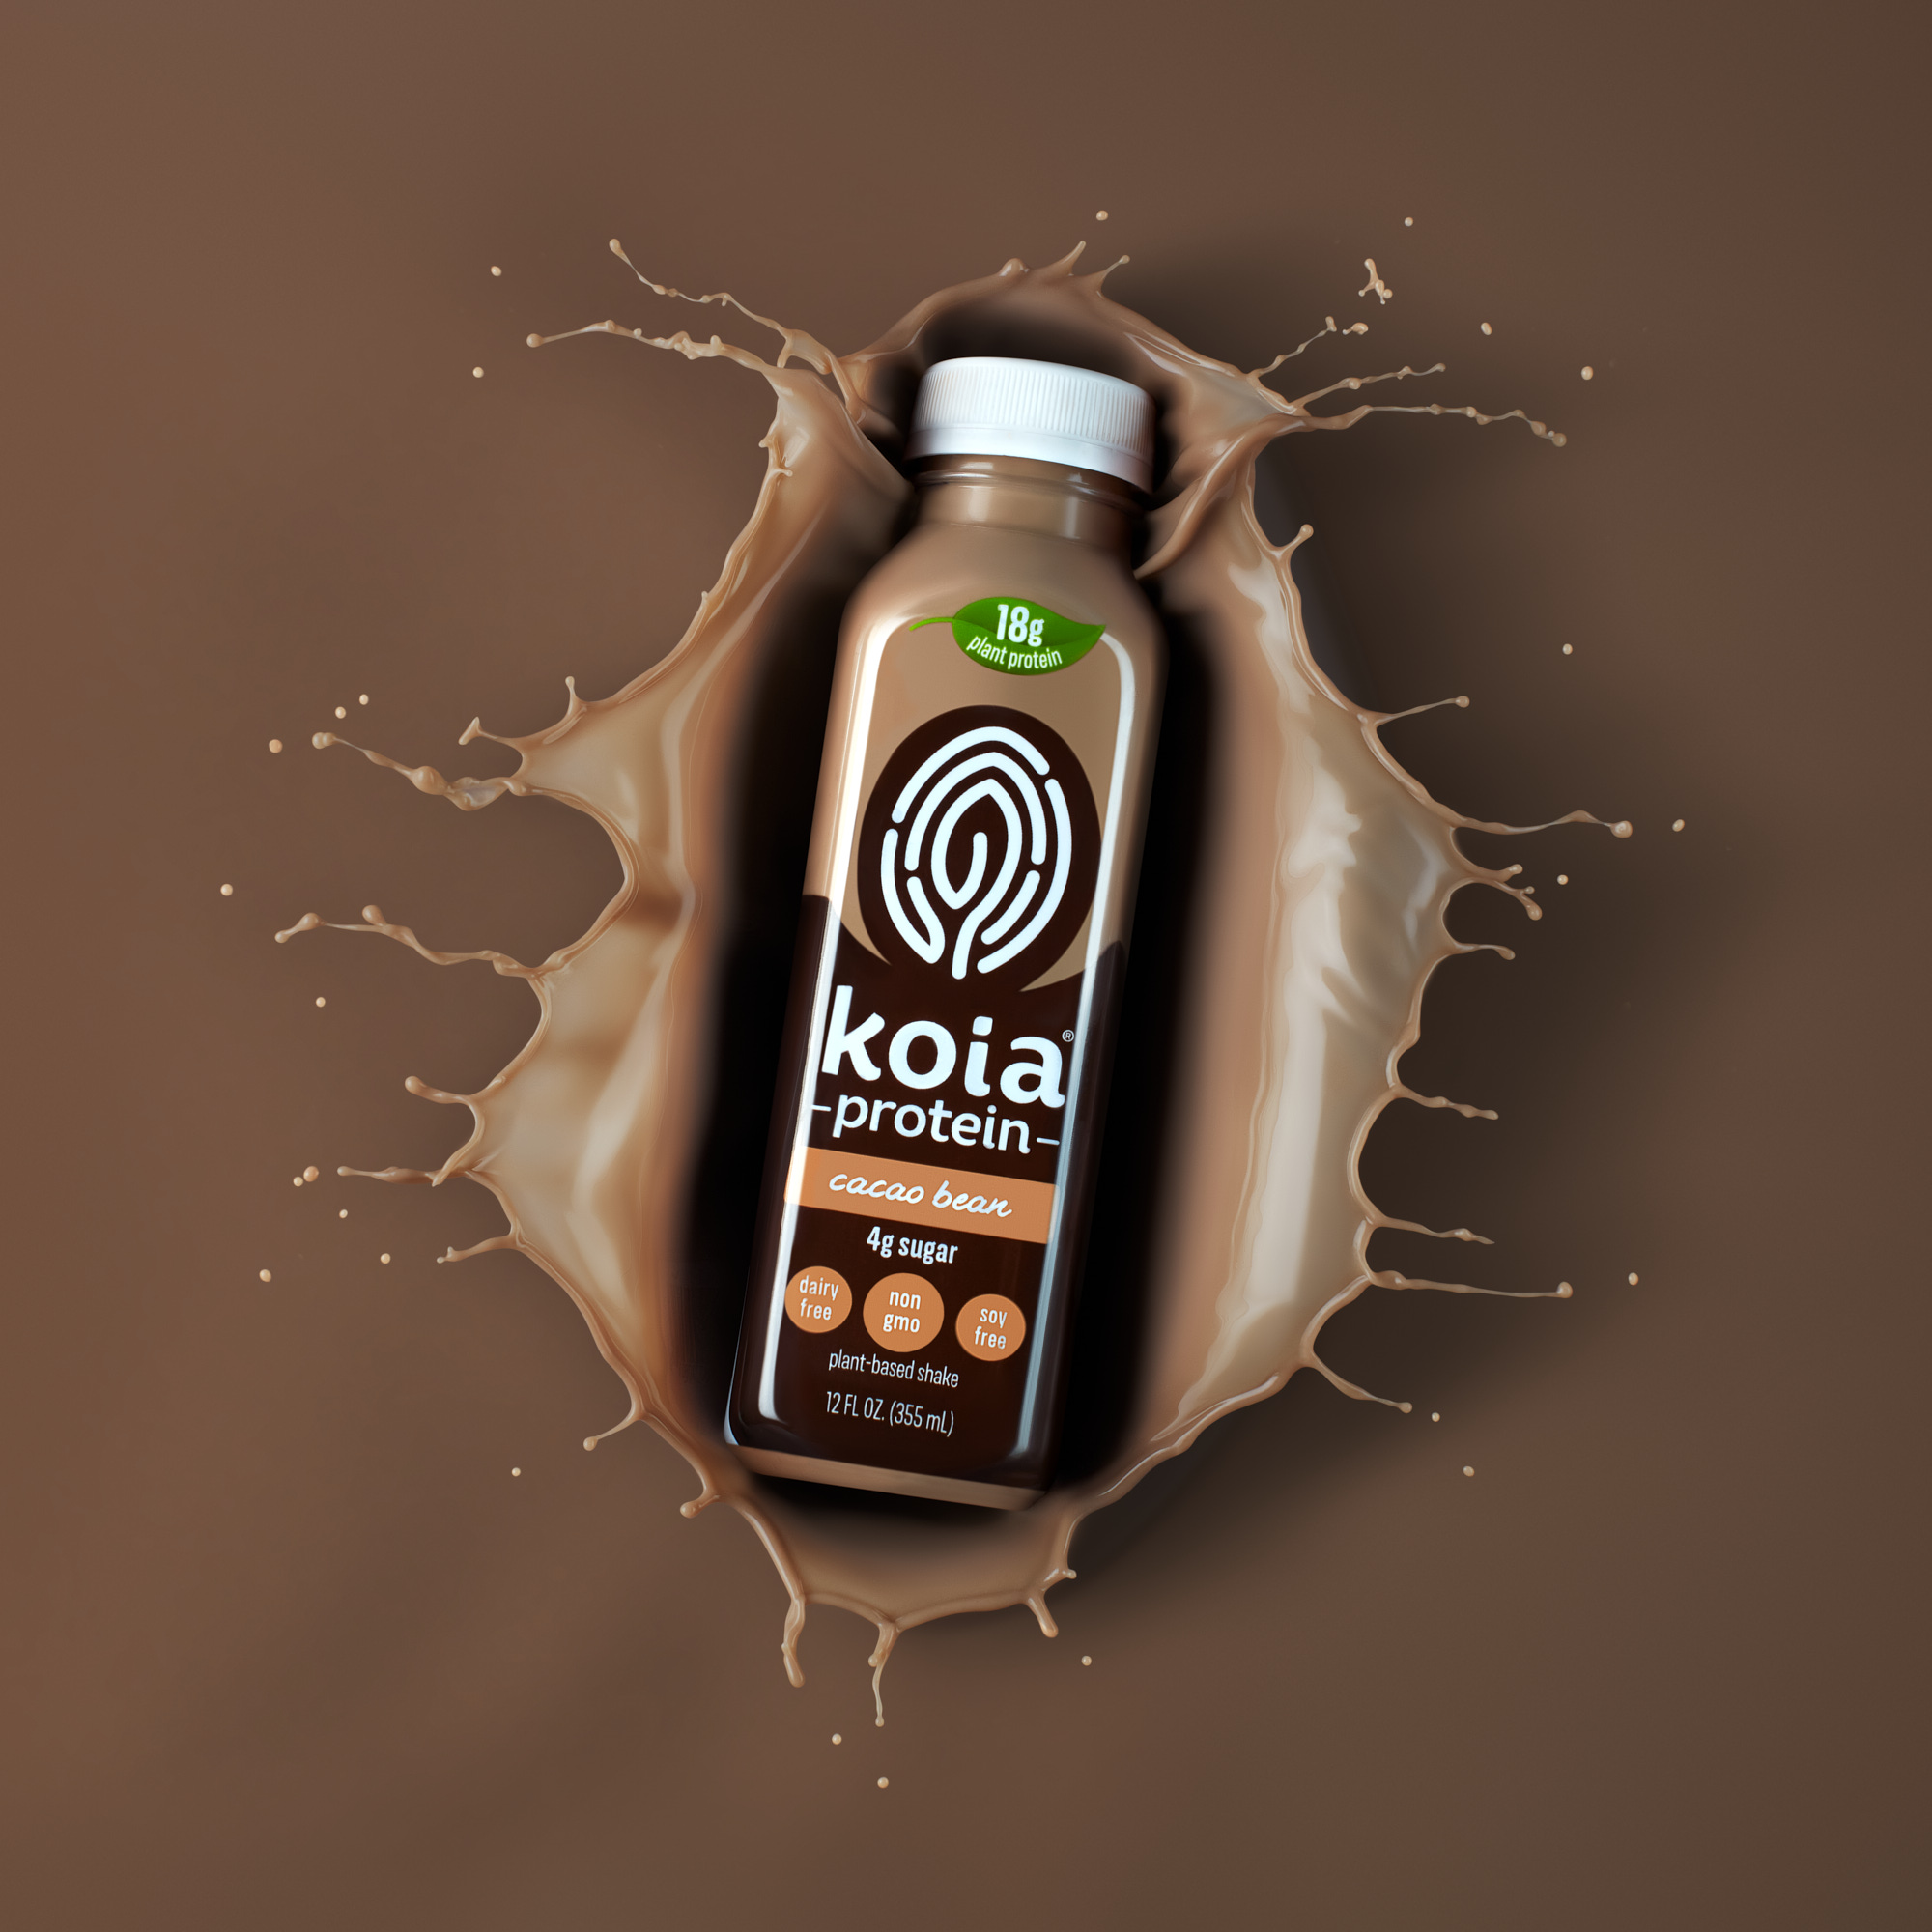 Koia chocolate protein drink splash.